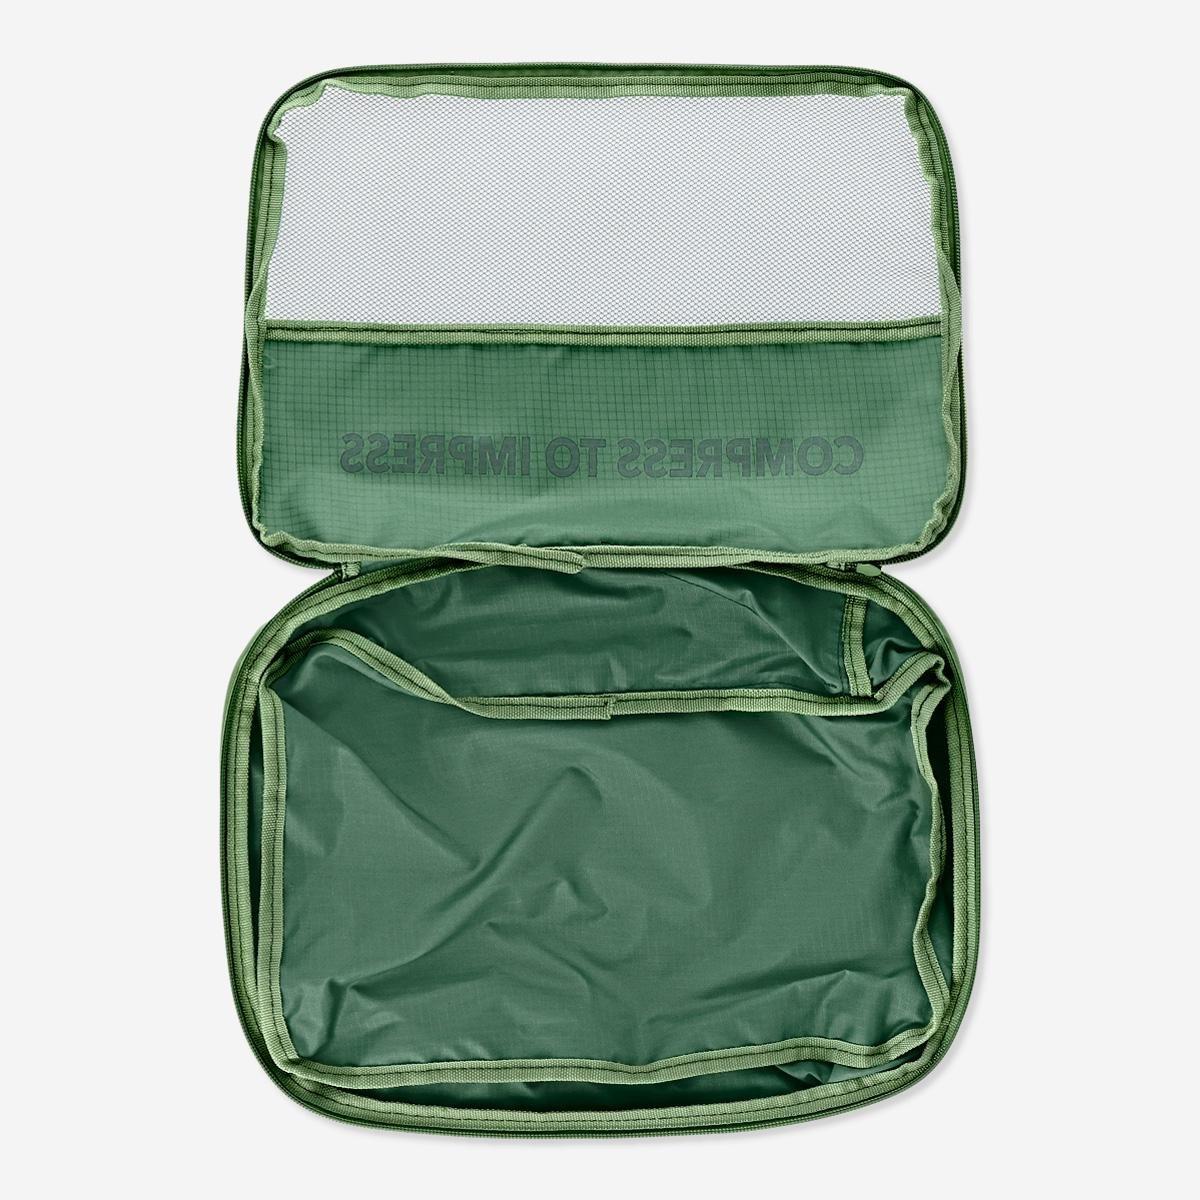 Green compression organiser bag. medium